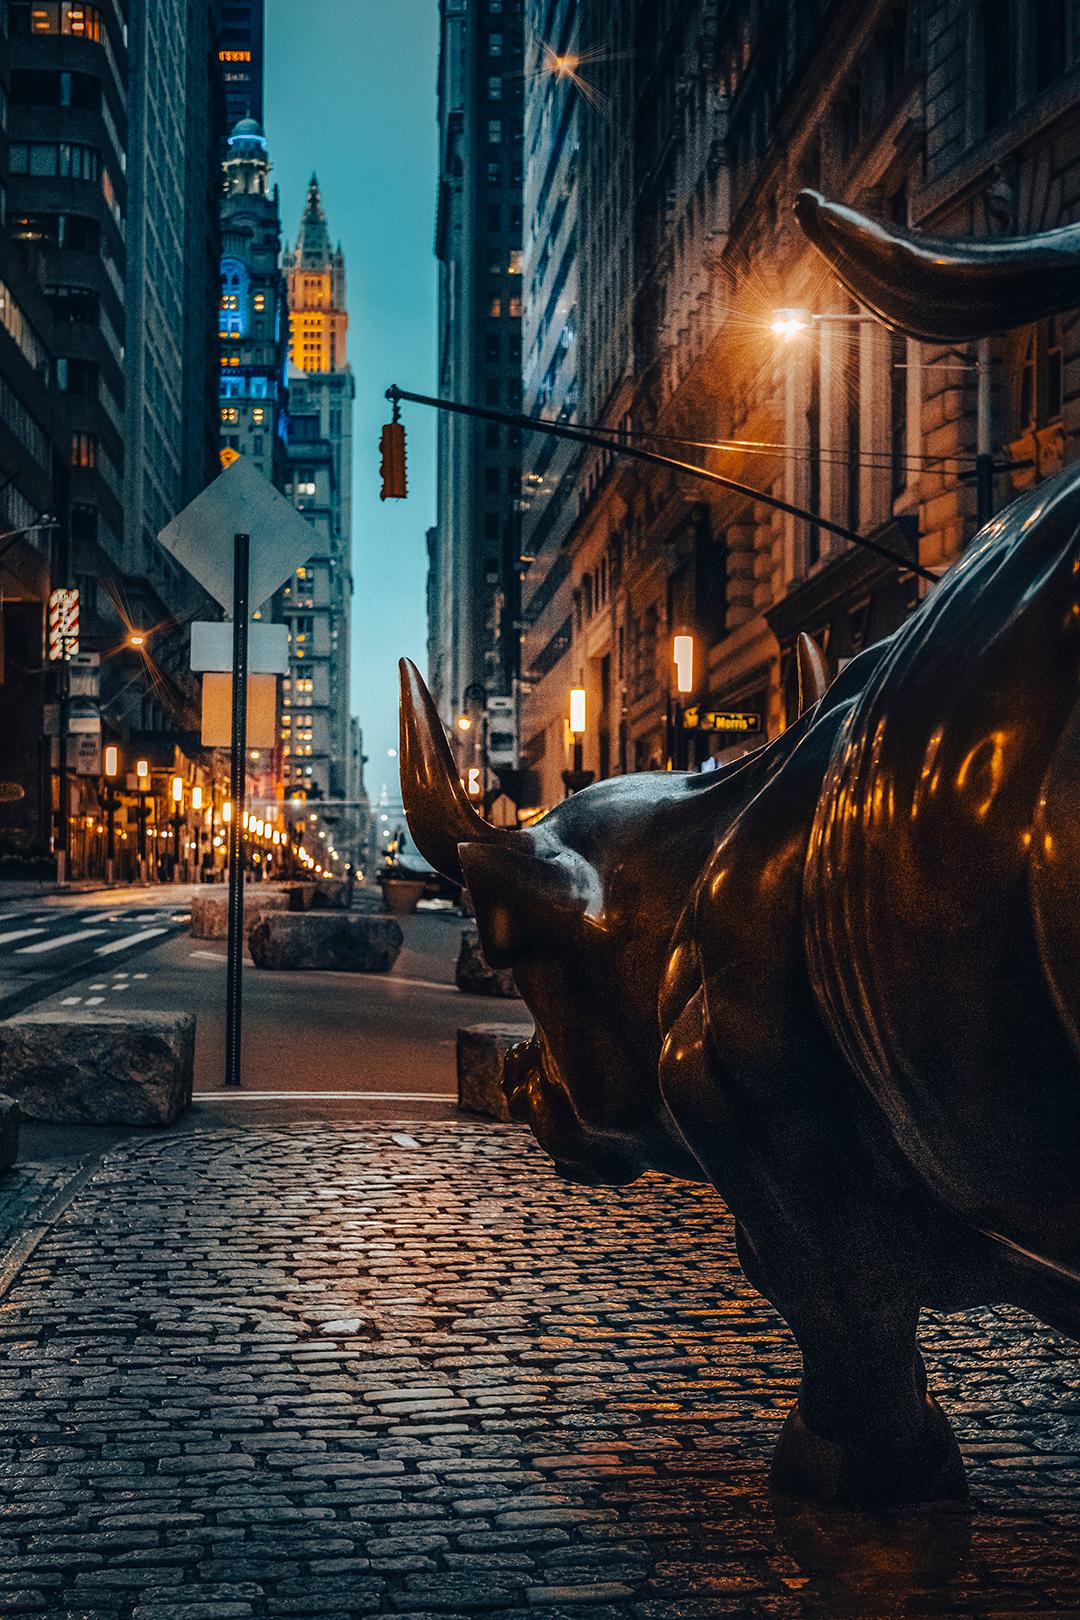 Wall Street Bull – NYC Photography, 54 Zoll x36 Zoll, signiert, limitierte Auflage von 5 Stück